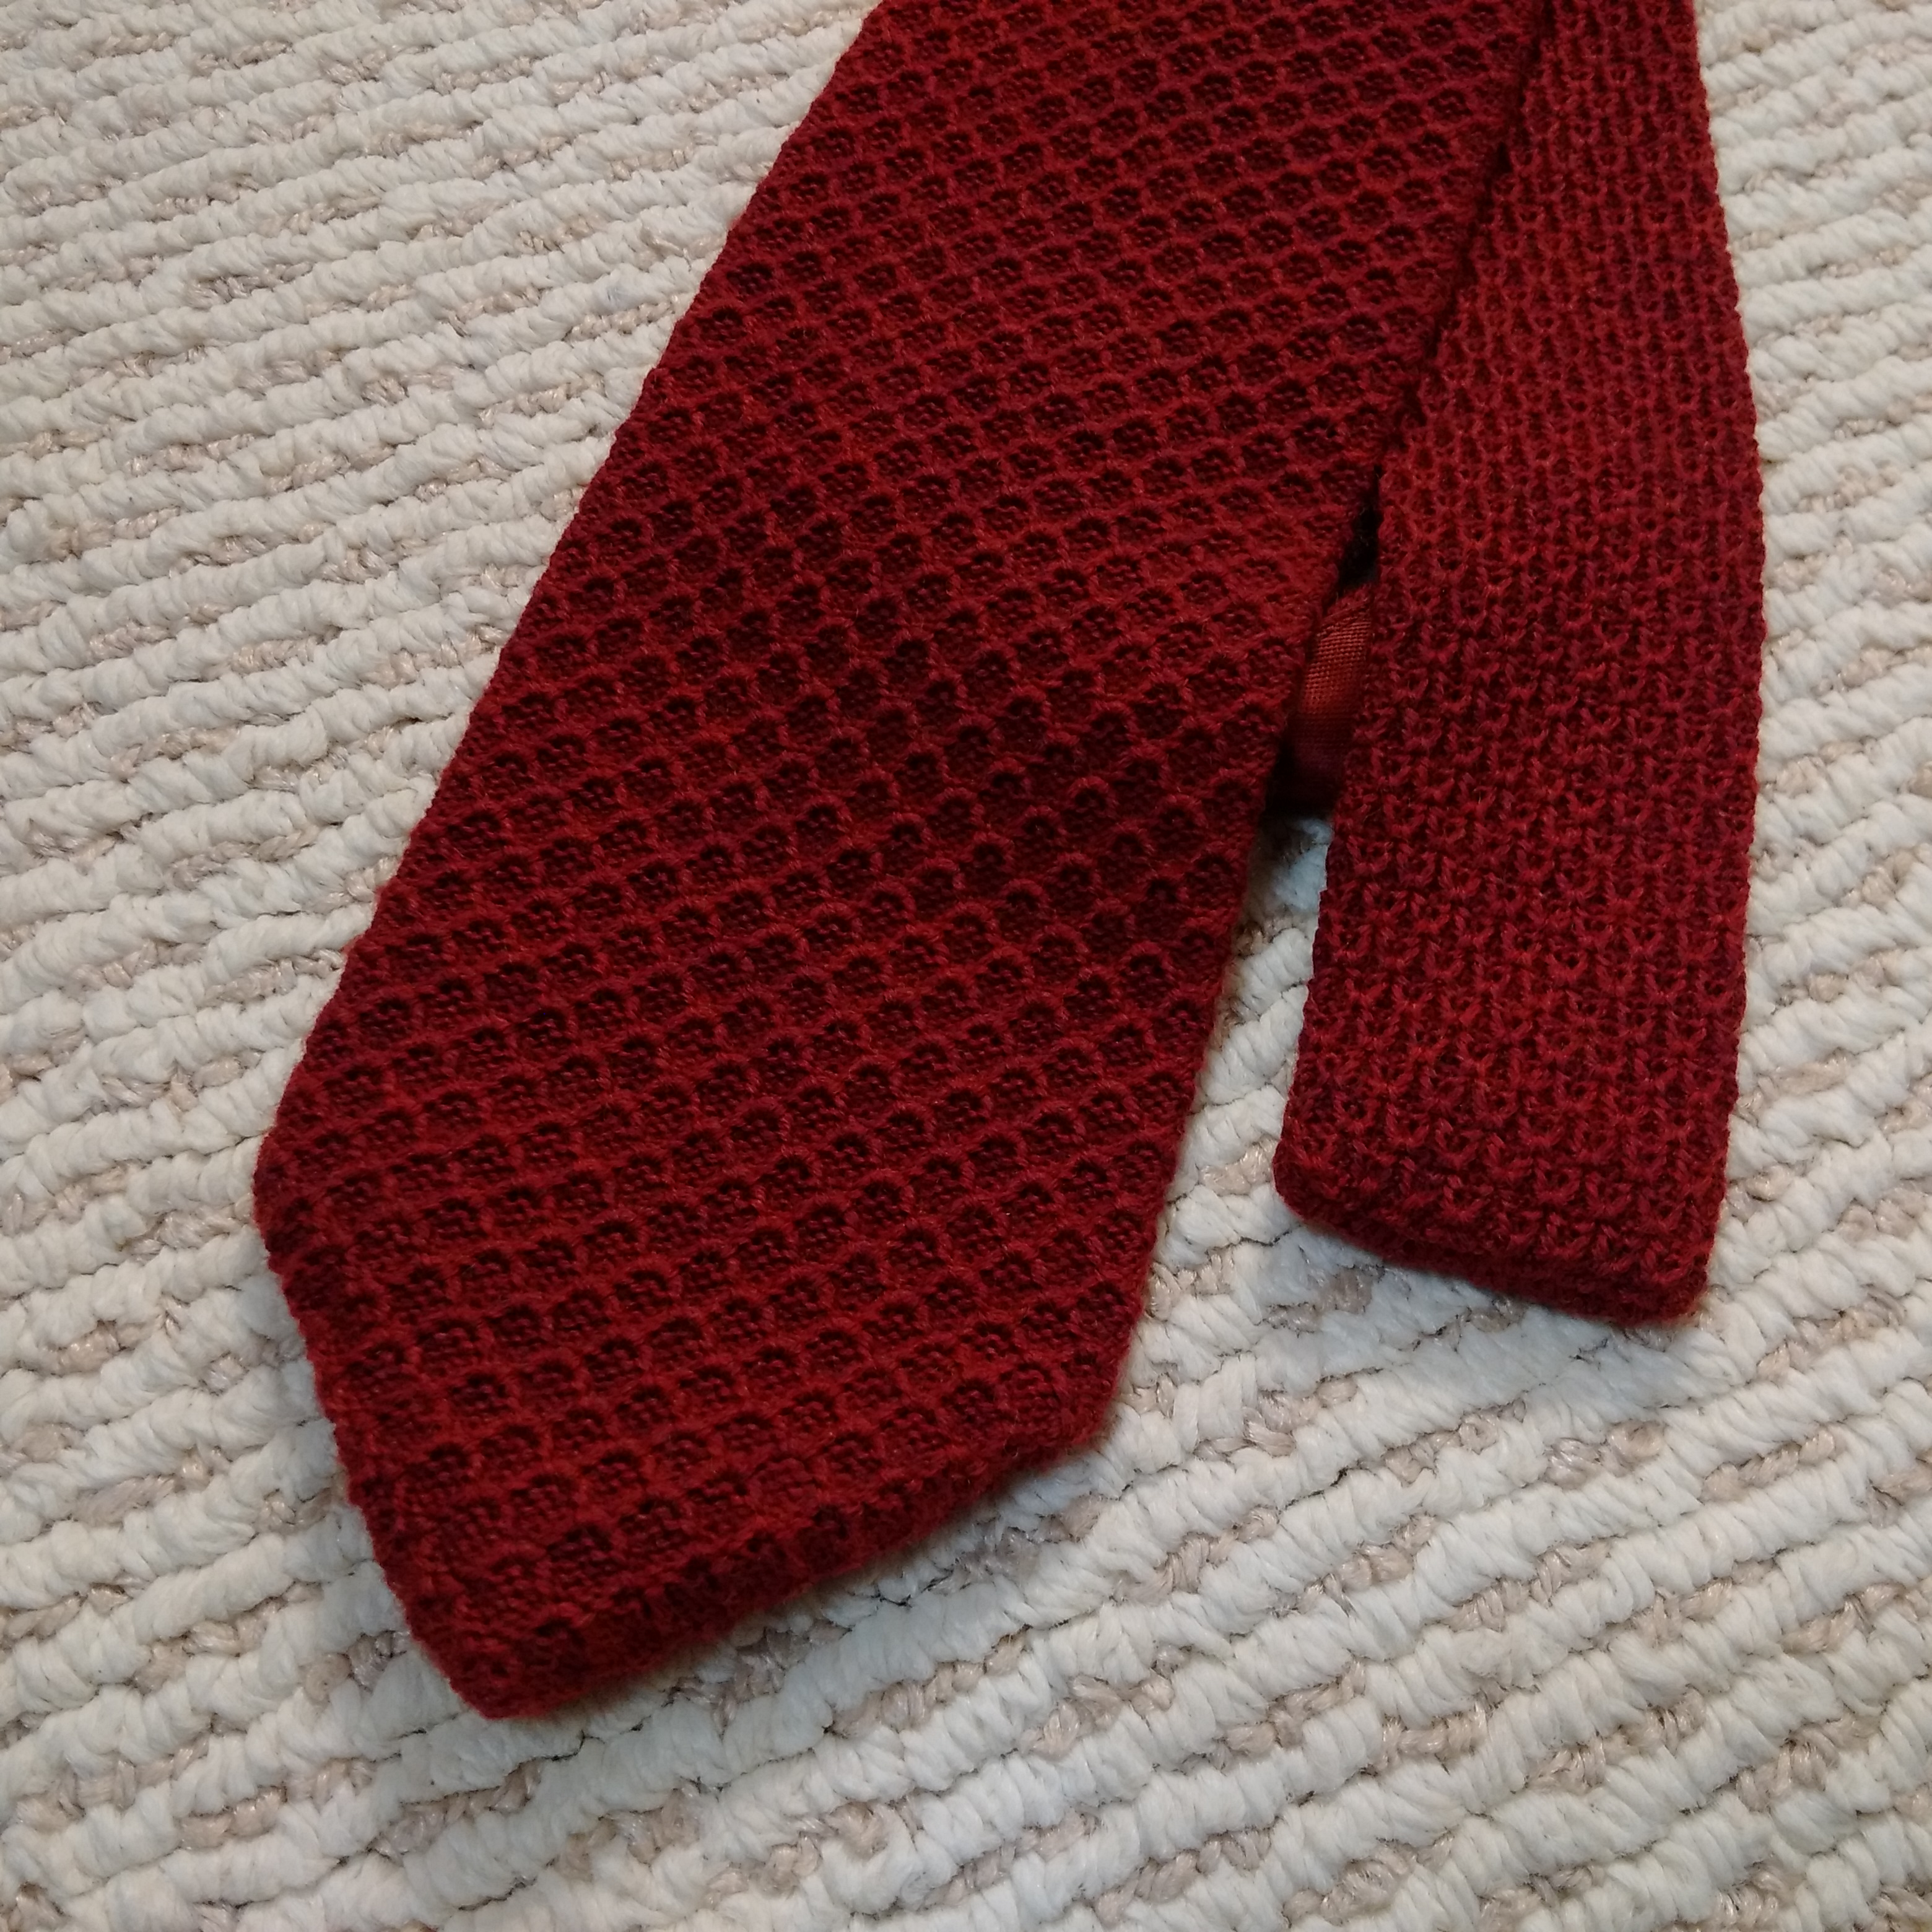 Tom Ford Knit Tie, Kent Wang, Drakes London Pocket Squares | Styleforum